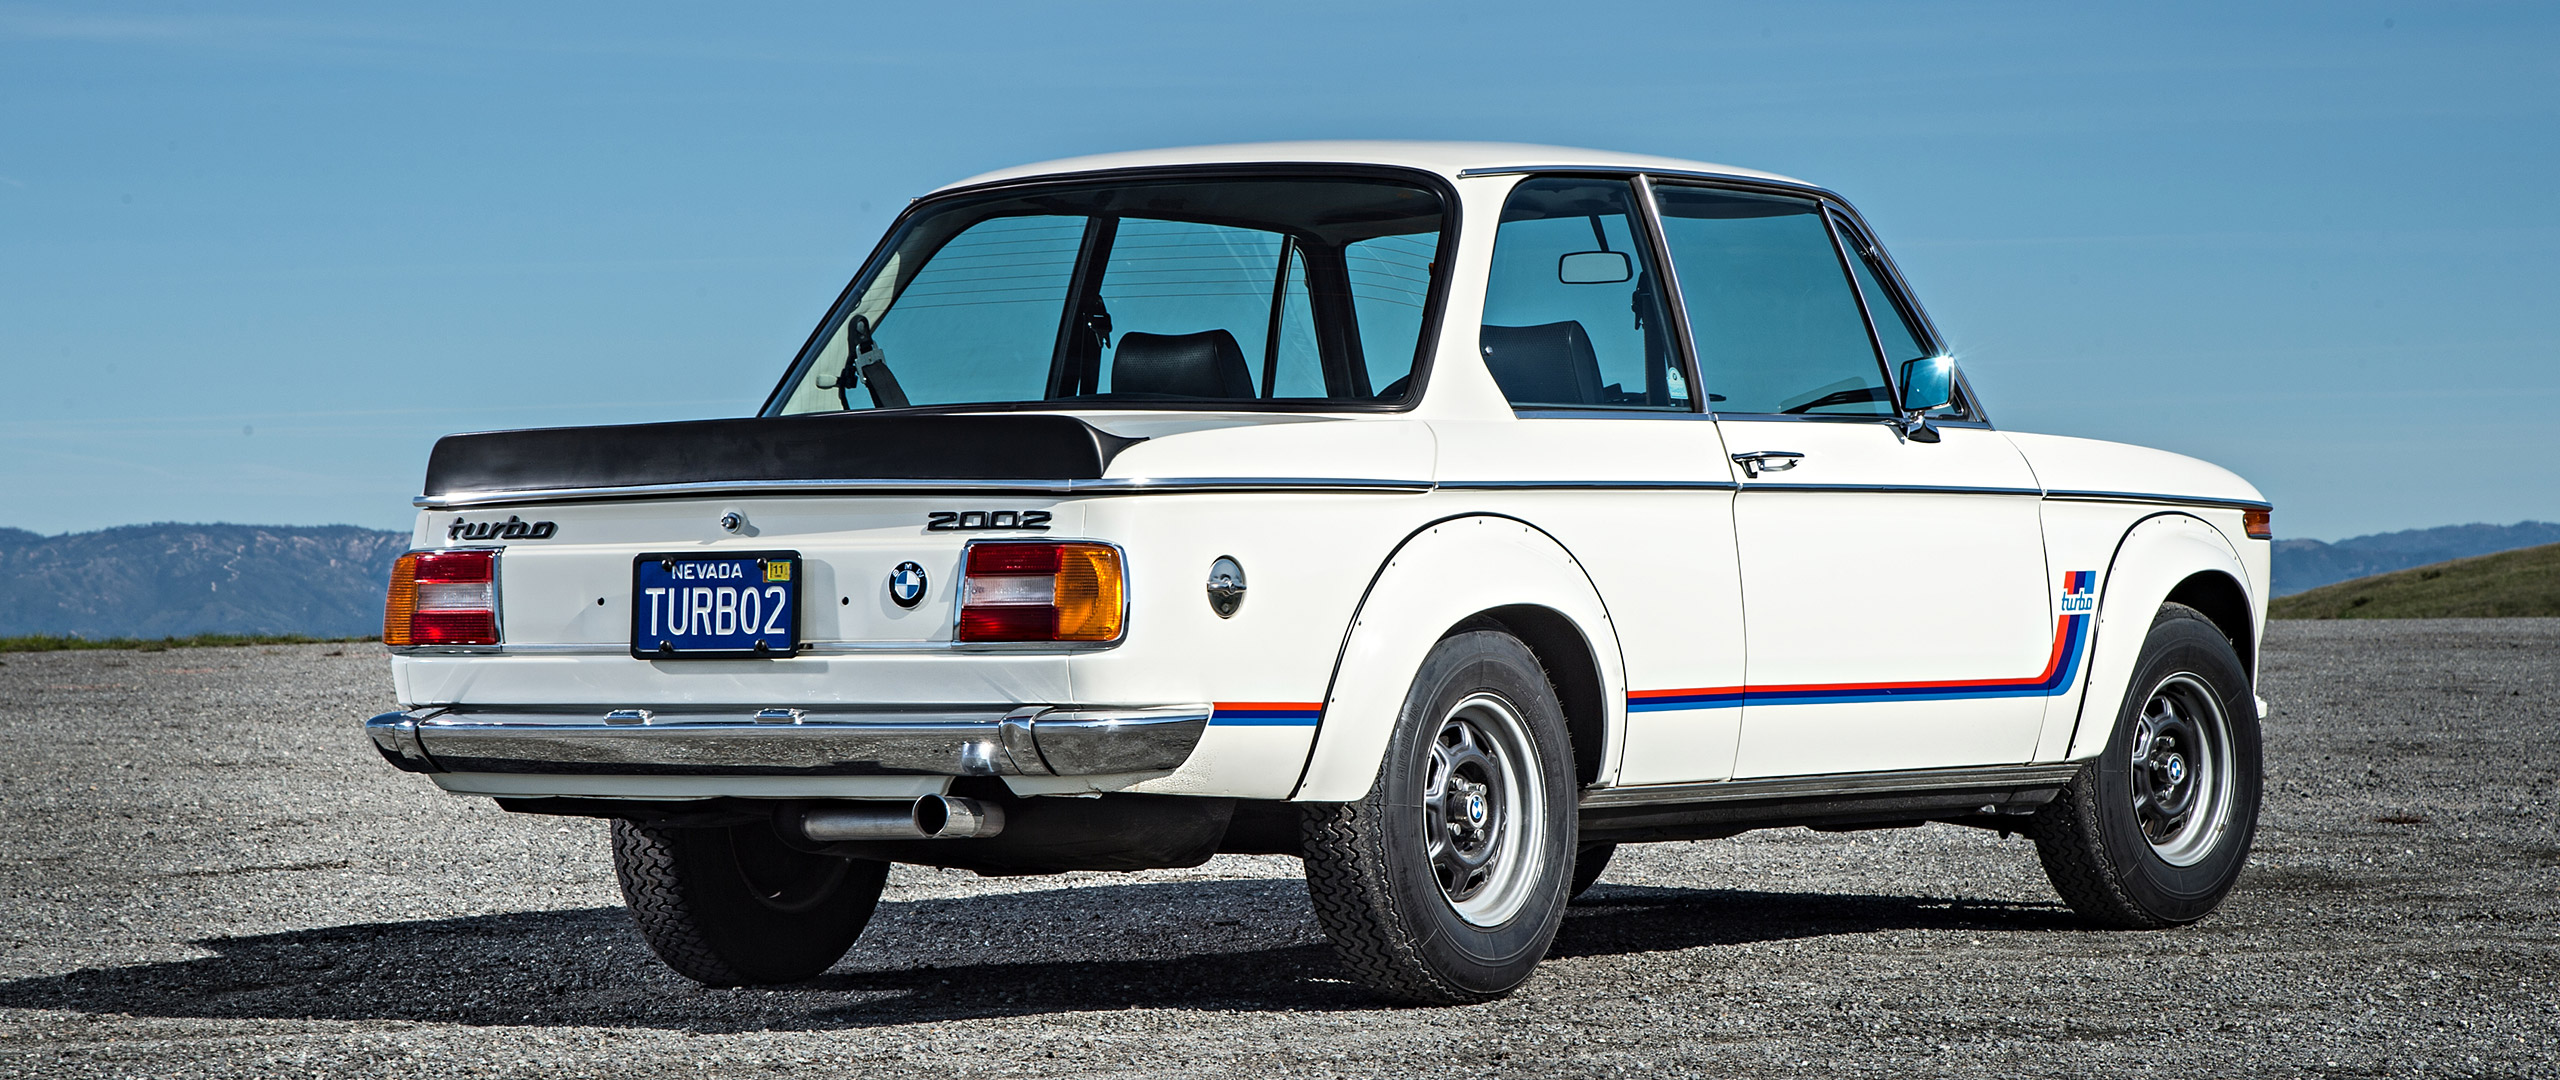  1974 BMW 2002 Turbo Wallpaper.